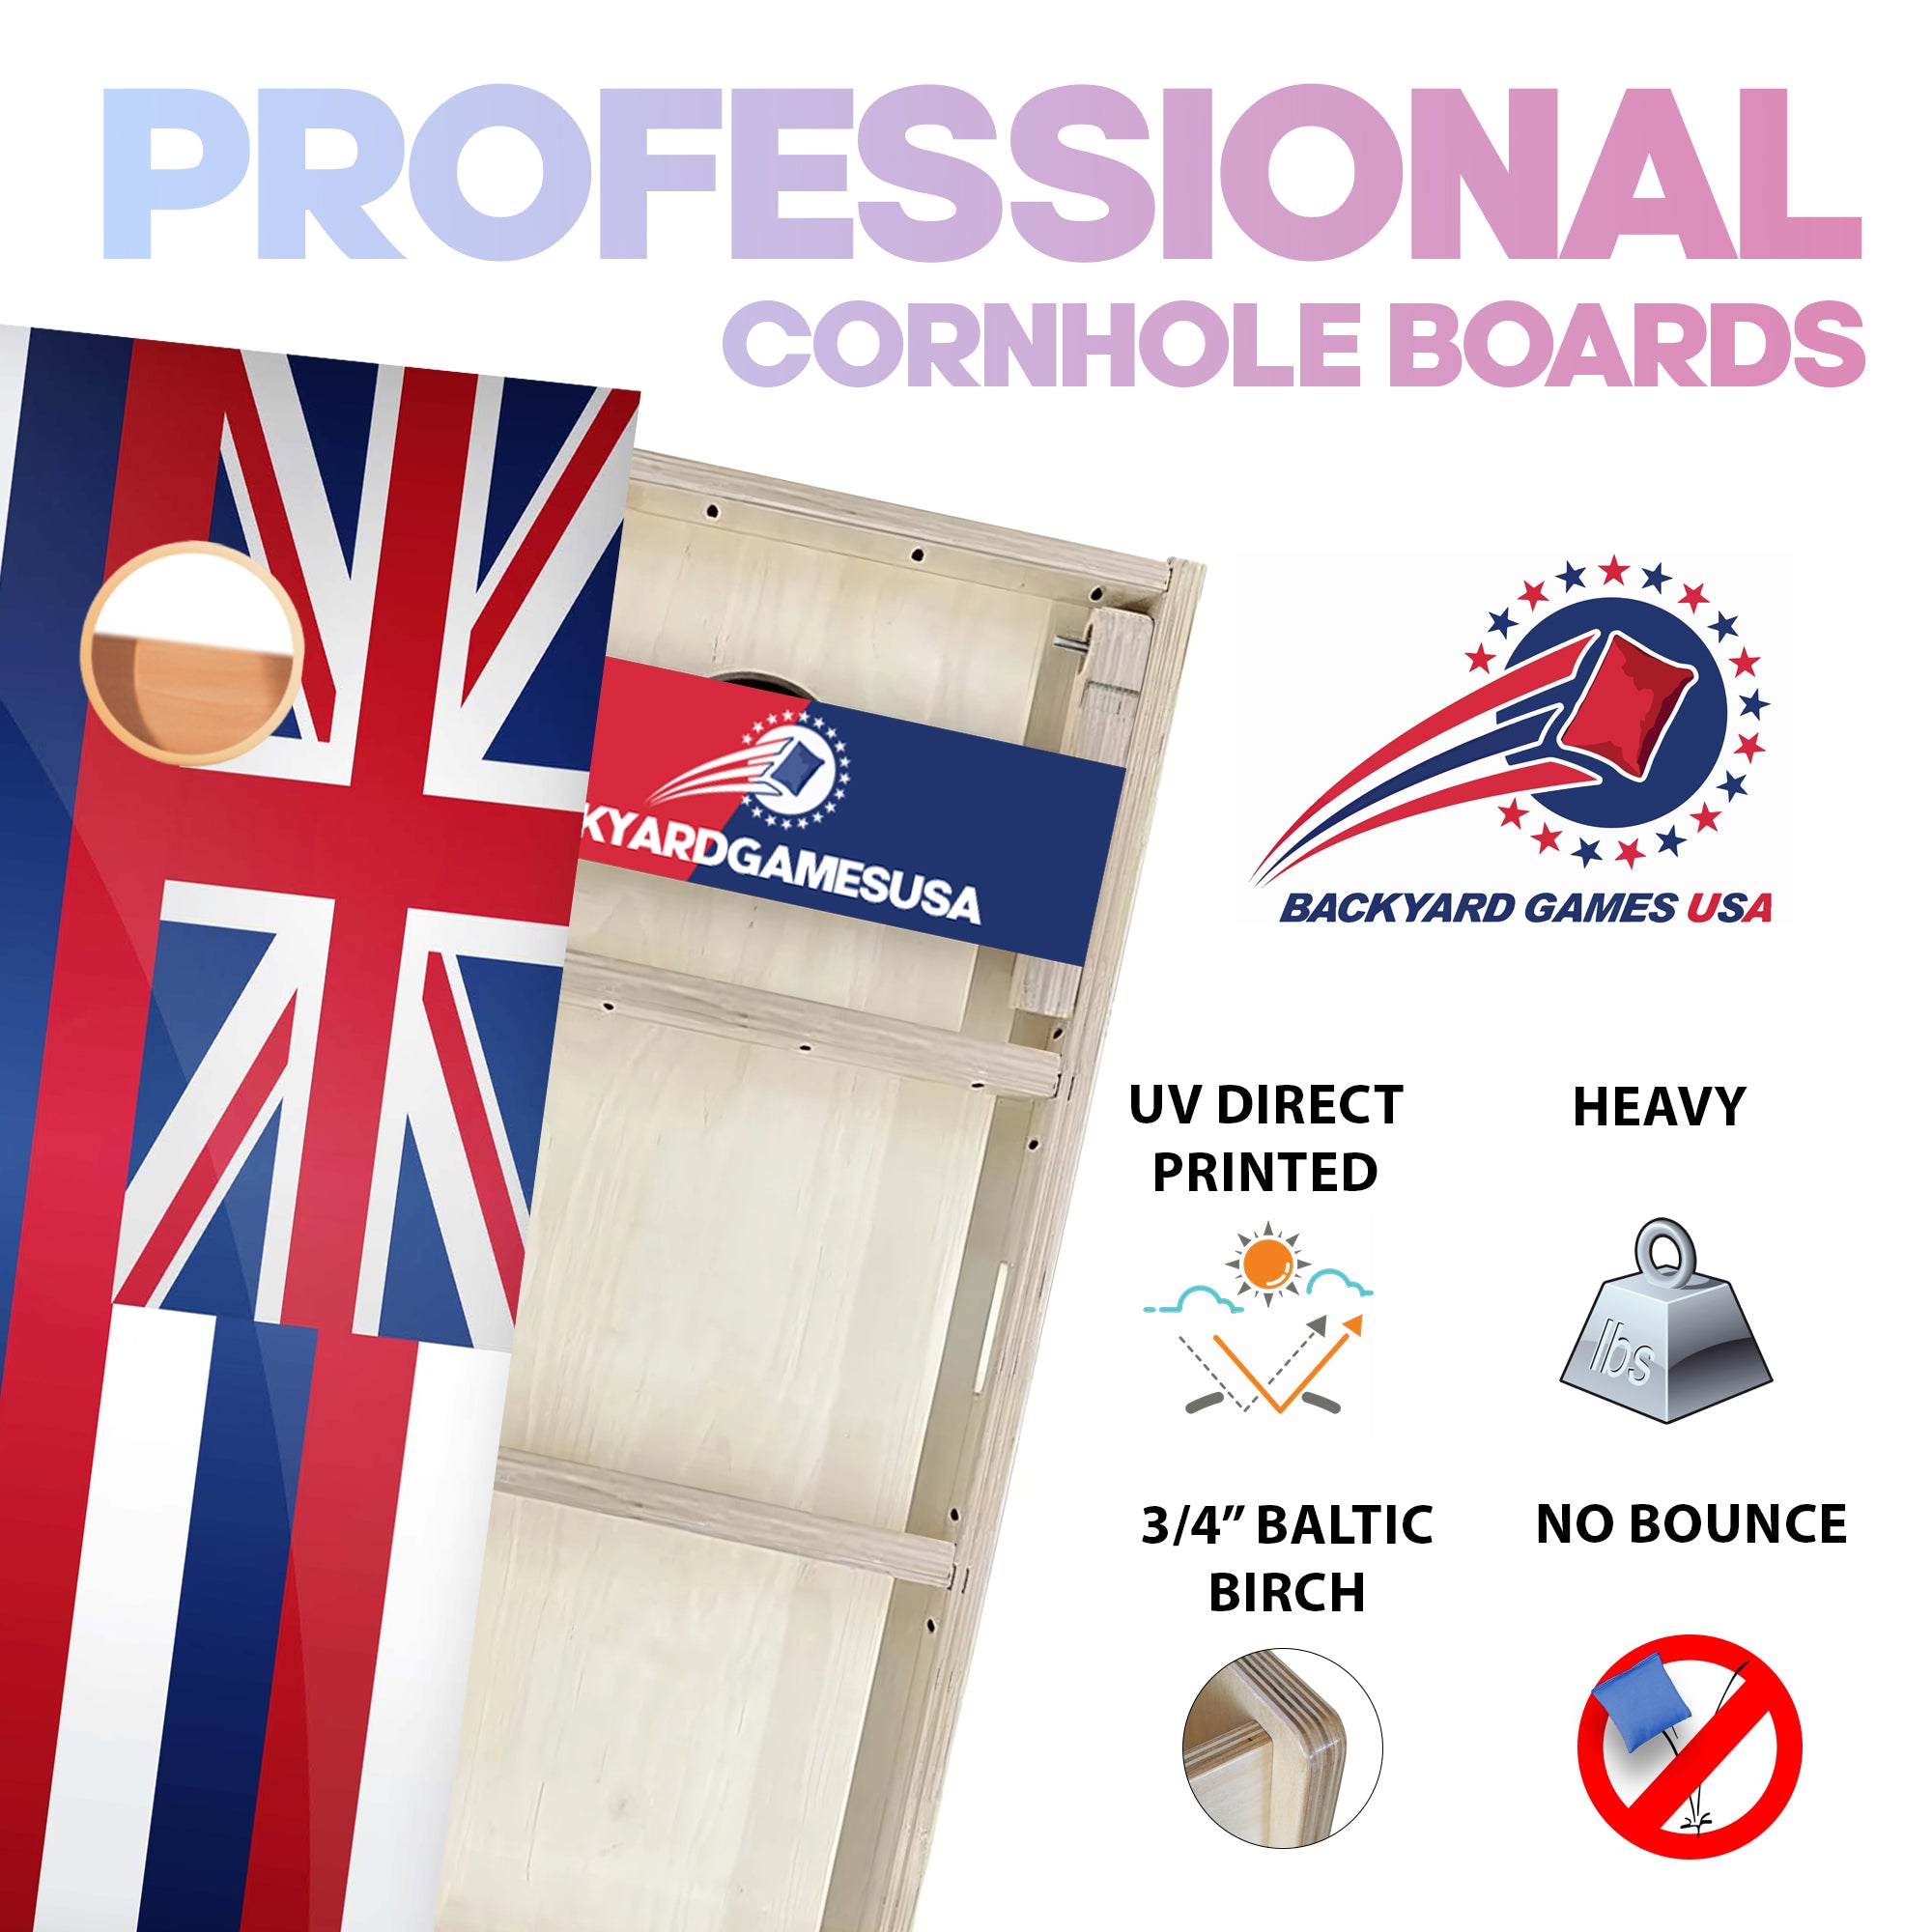 Hawaii Professional Cornhole Boards